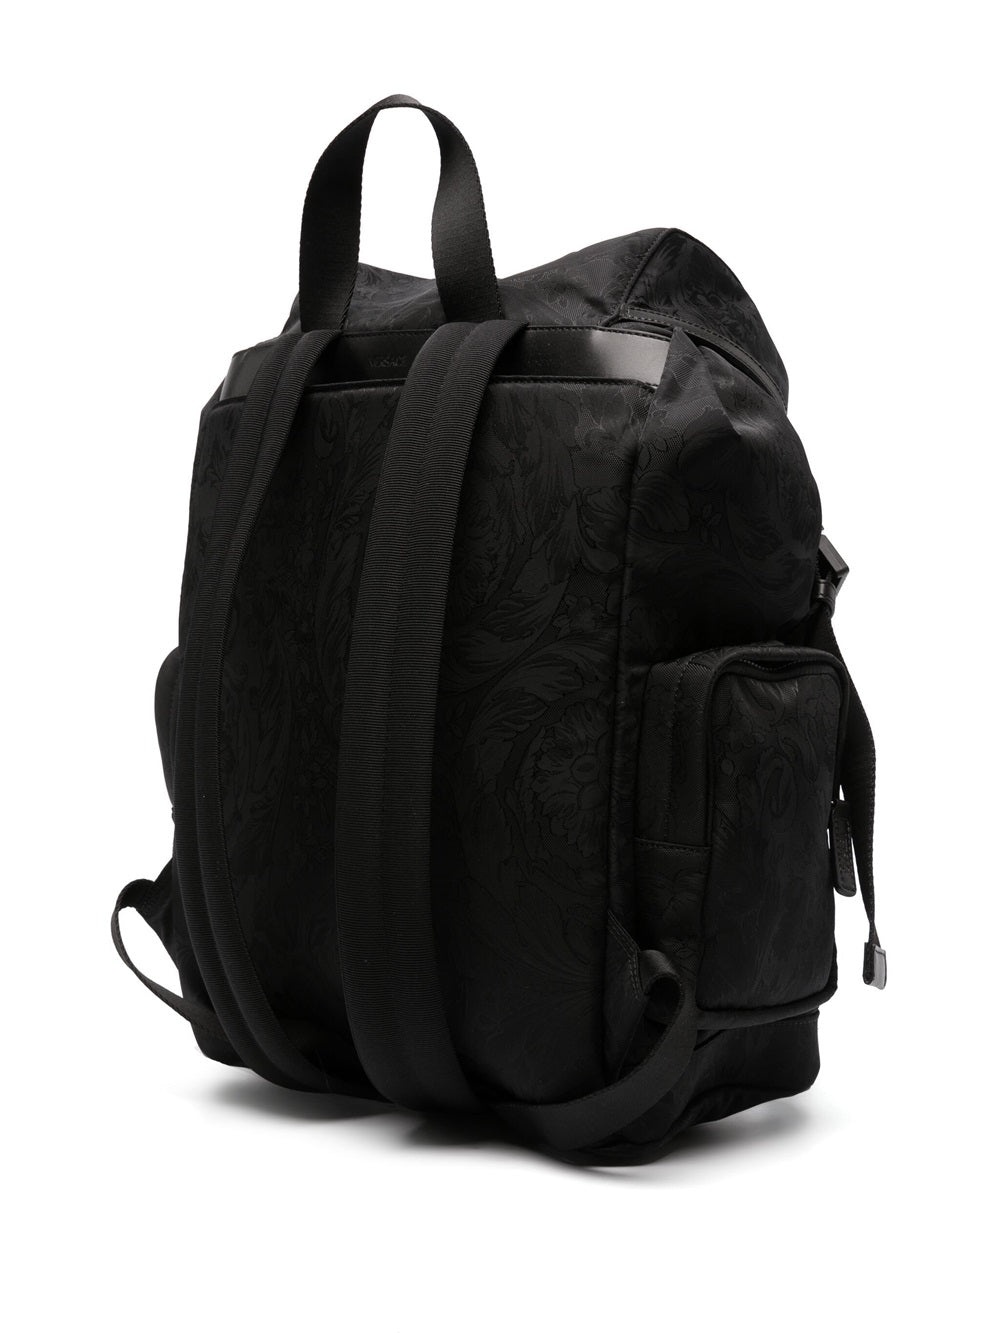 Neo Nylon jacquard backpack - 2